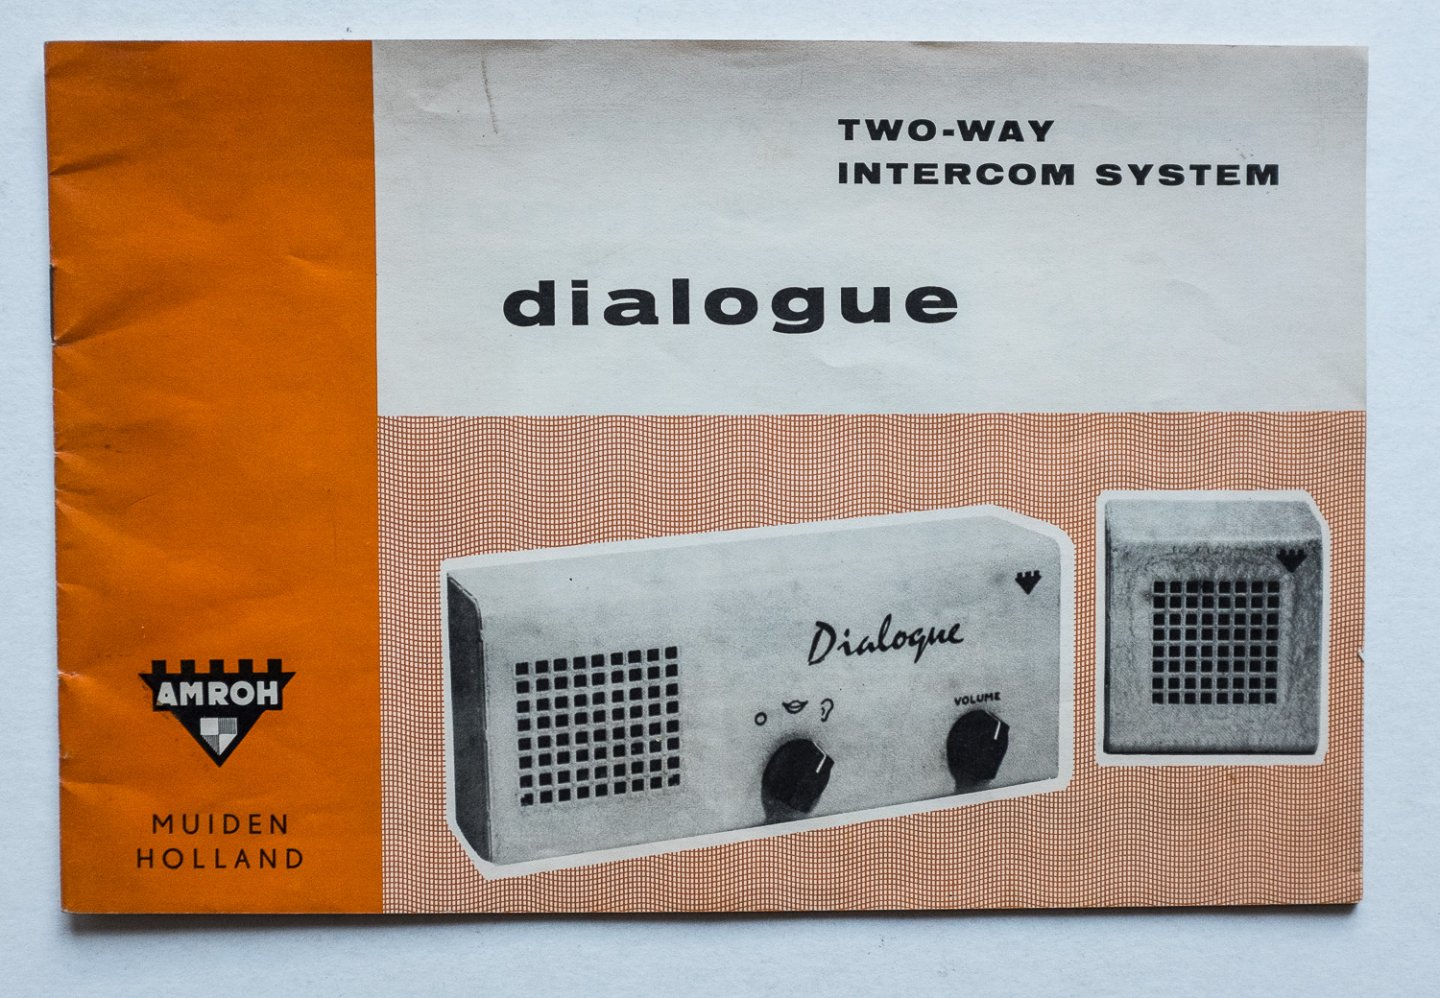  - Dialogue - two-way intercom system